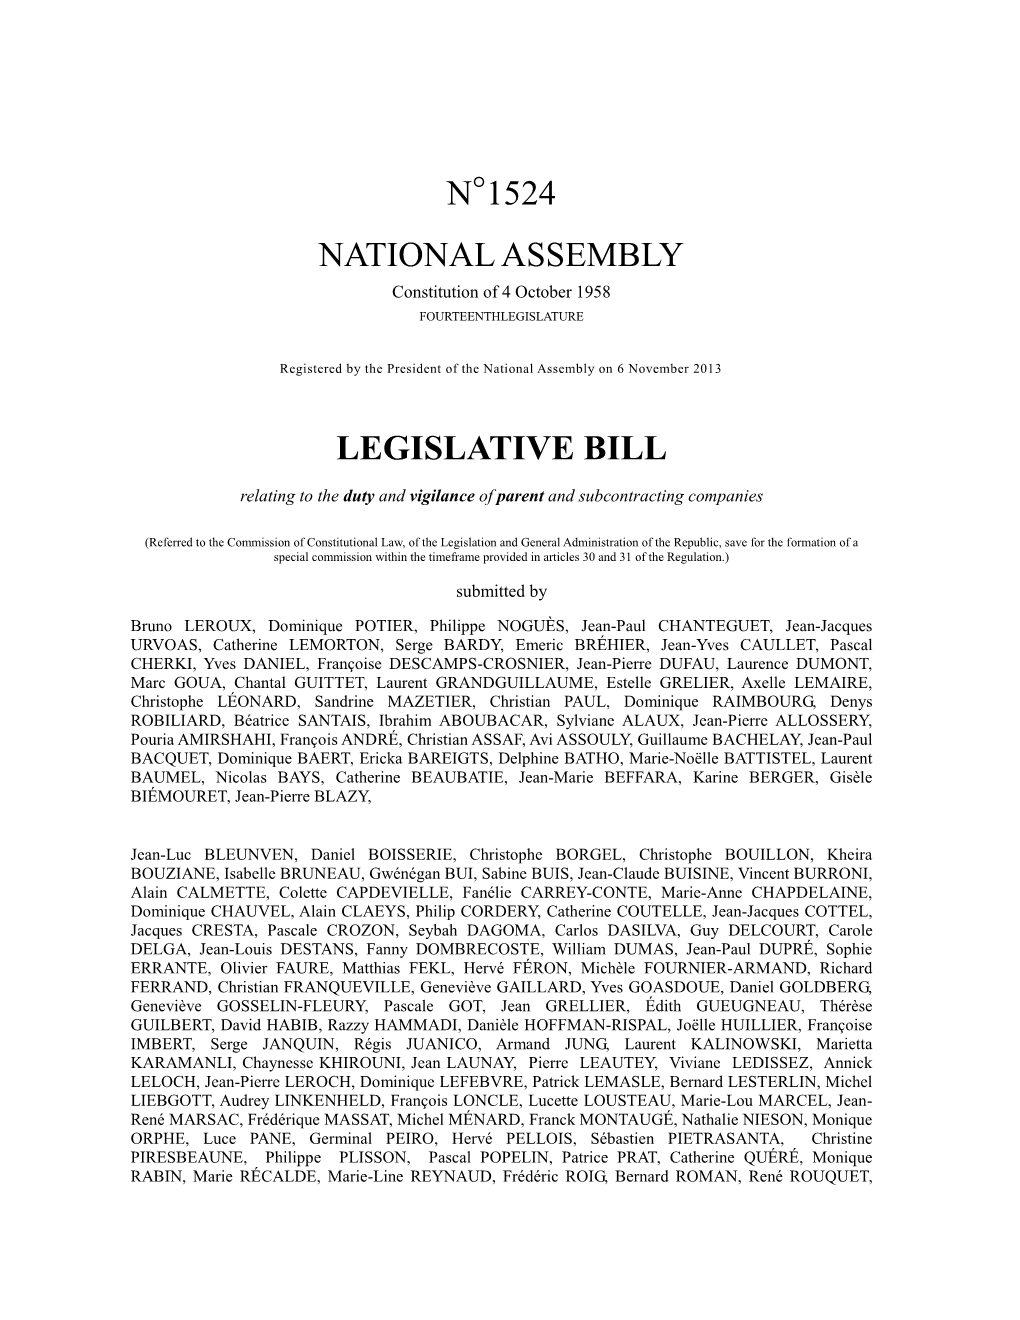 N°1524 National Assembly Legislative Bill